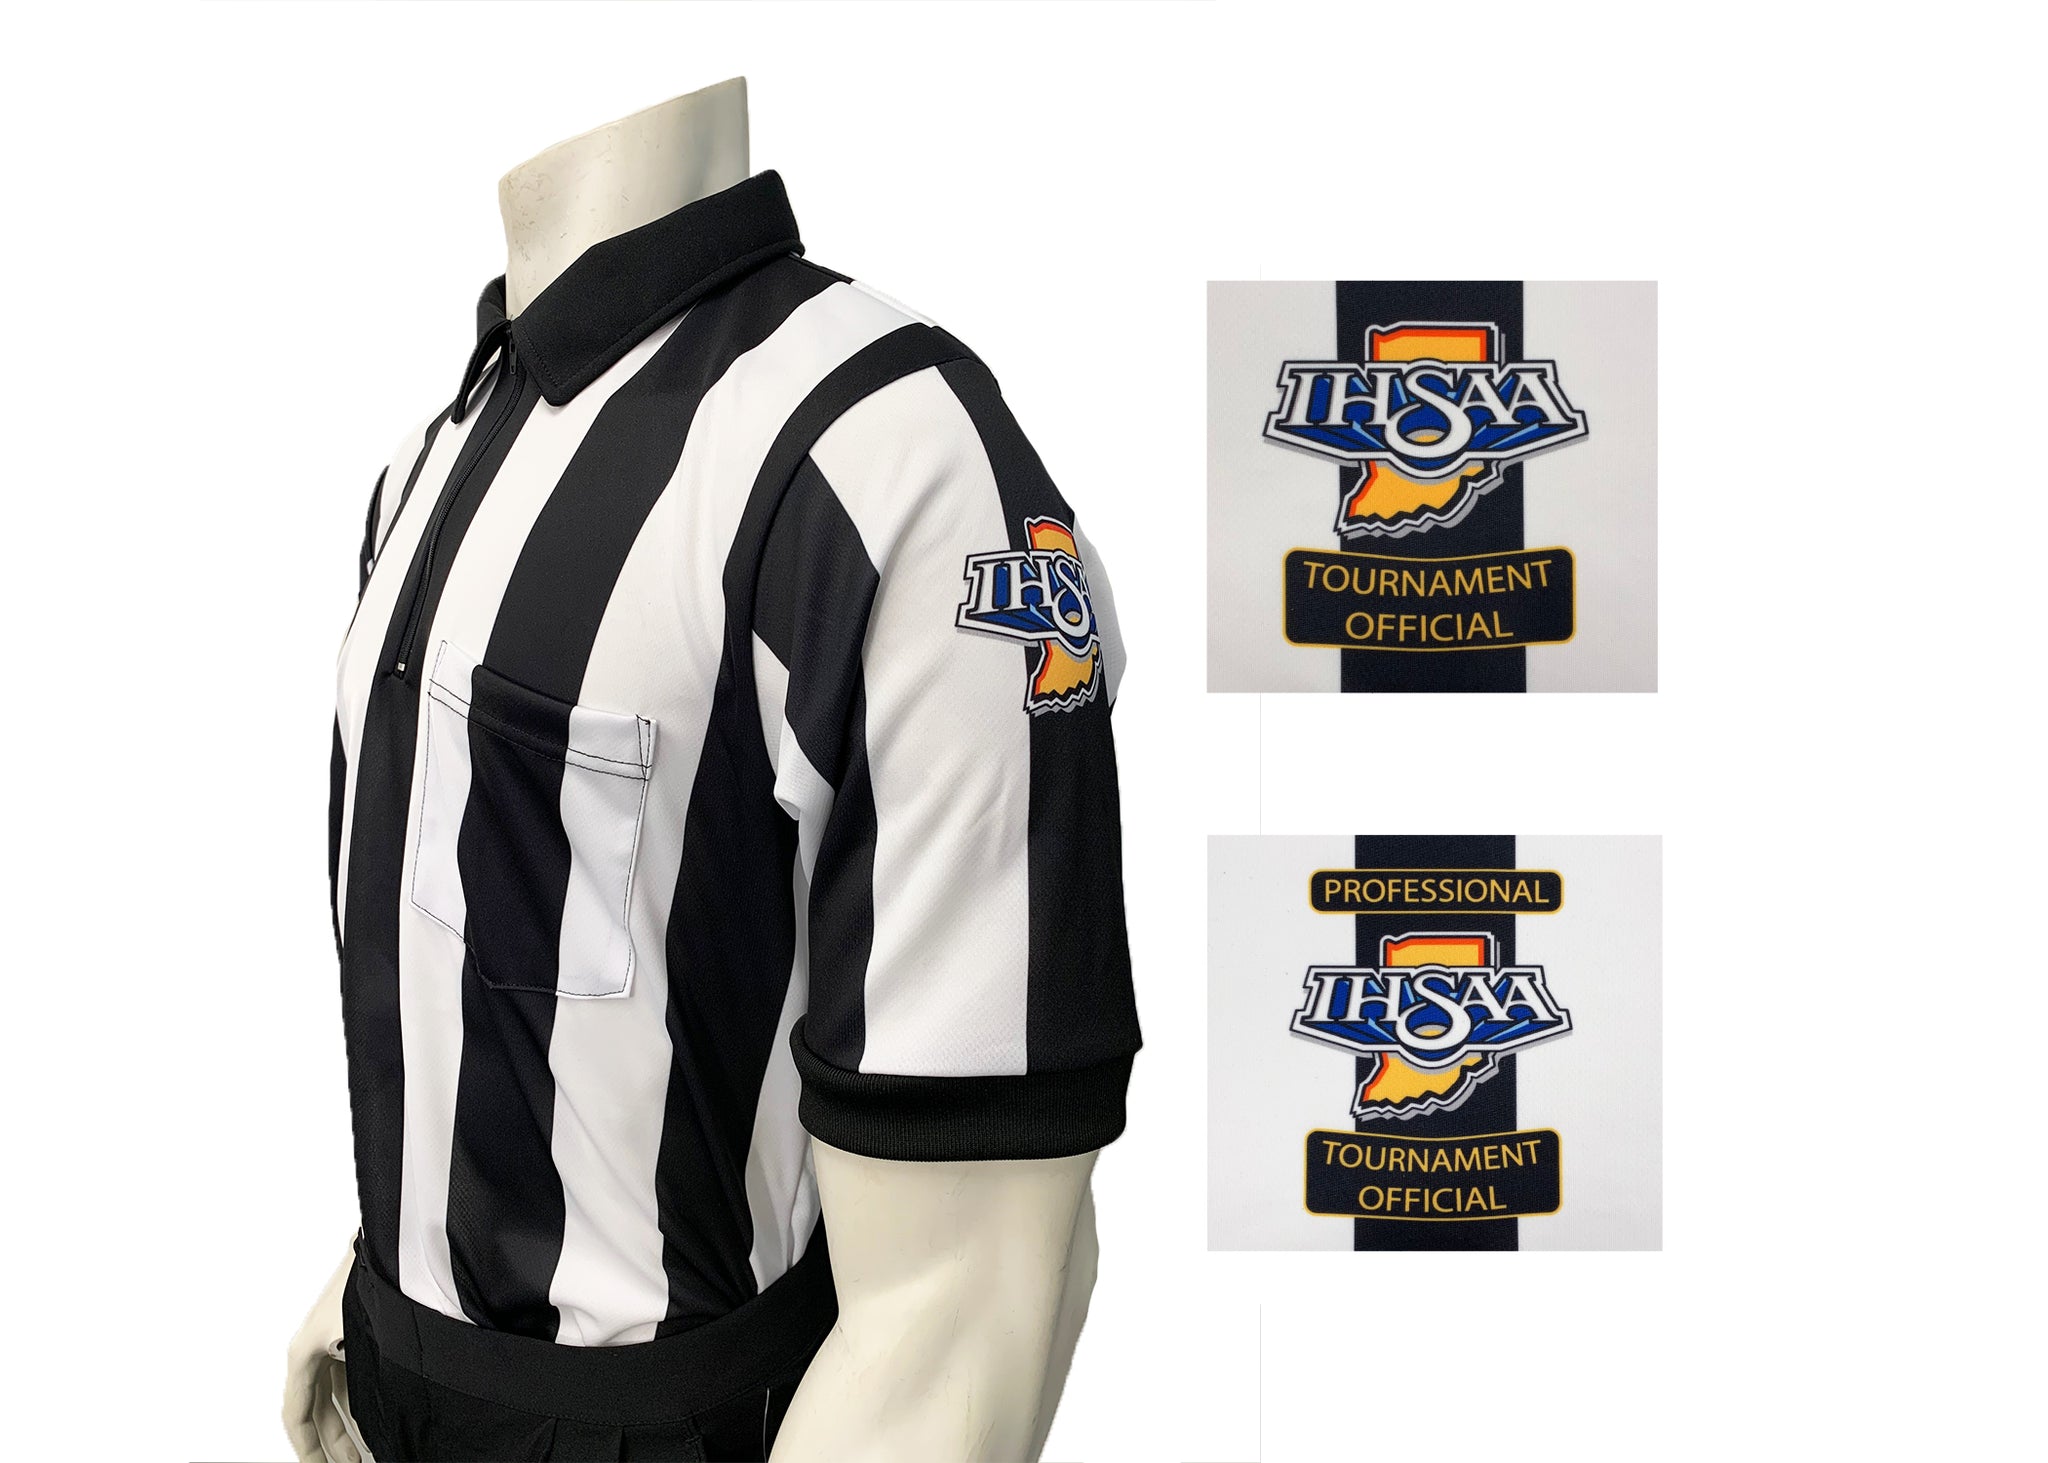 USA137IN - Smitty "Made in USA" - "PERFORMANCE MESH" "IHSAA" Short Sleeve Football Shirt